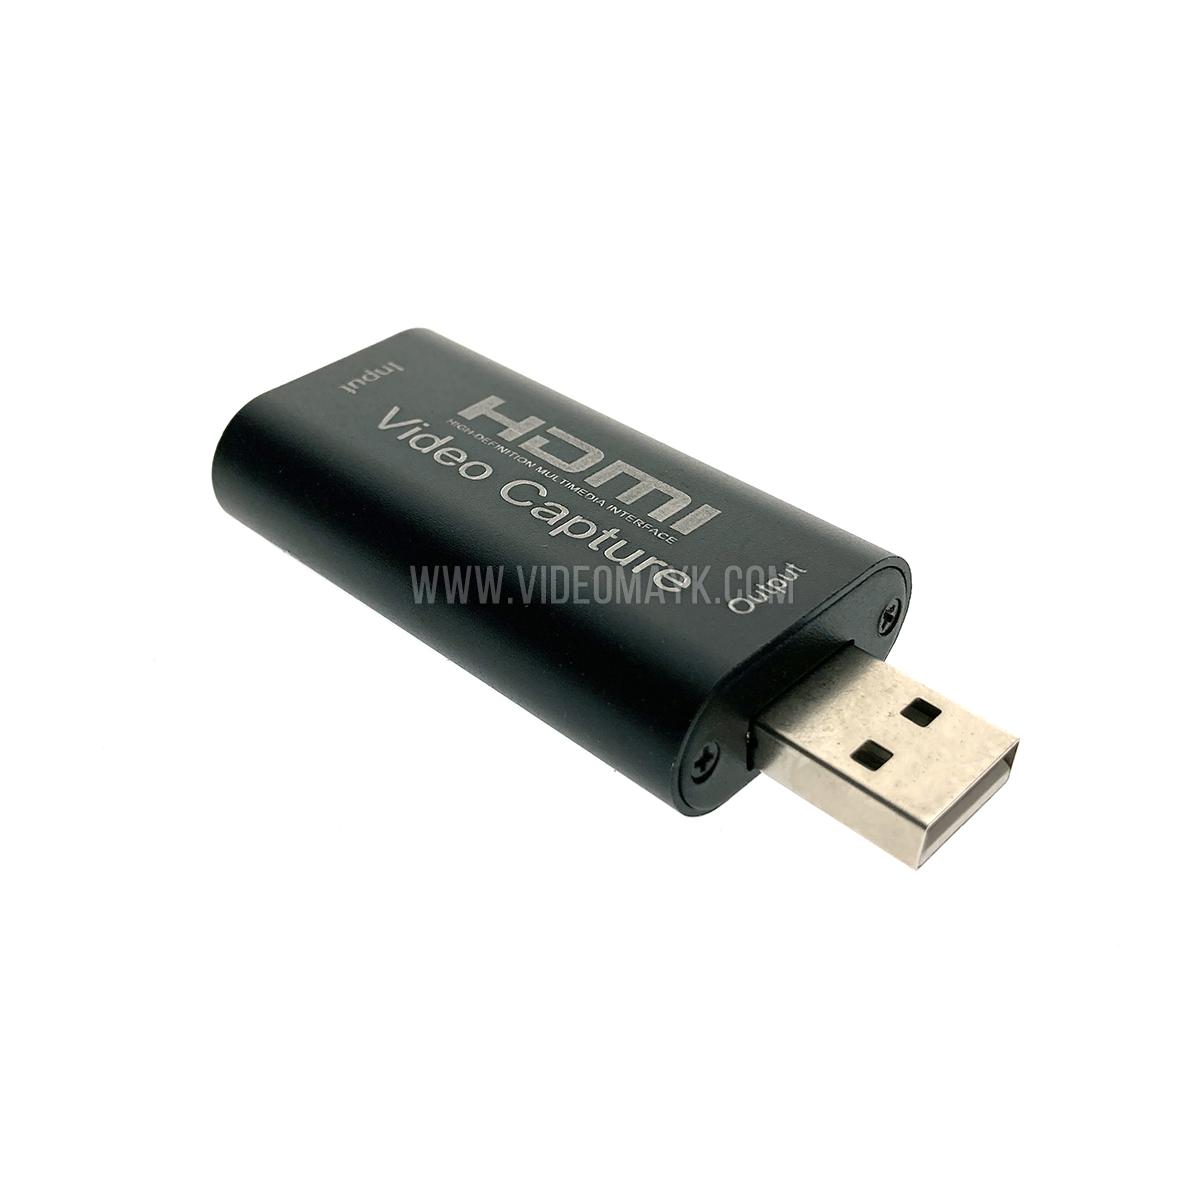 Видеоадаптер HDMI to USB capture video EcapViHU Espada для захвата видеоконтента с HDMI источника